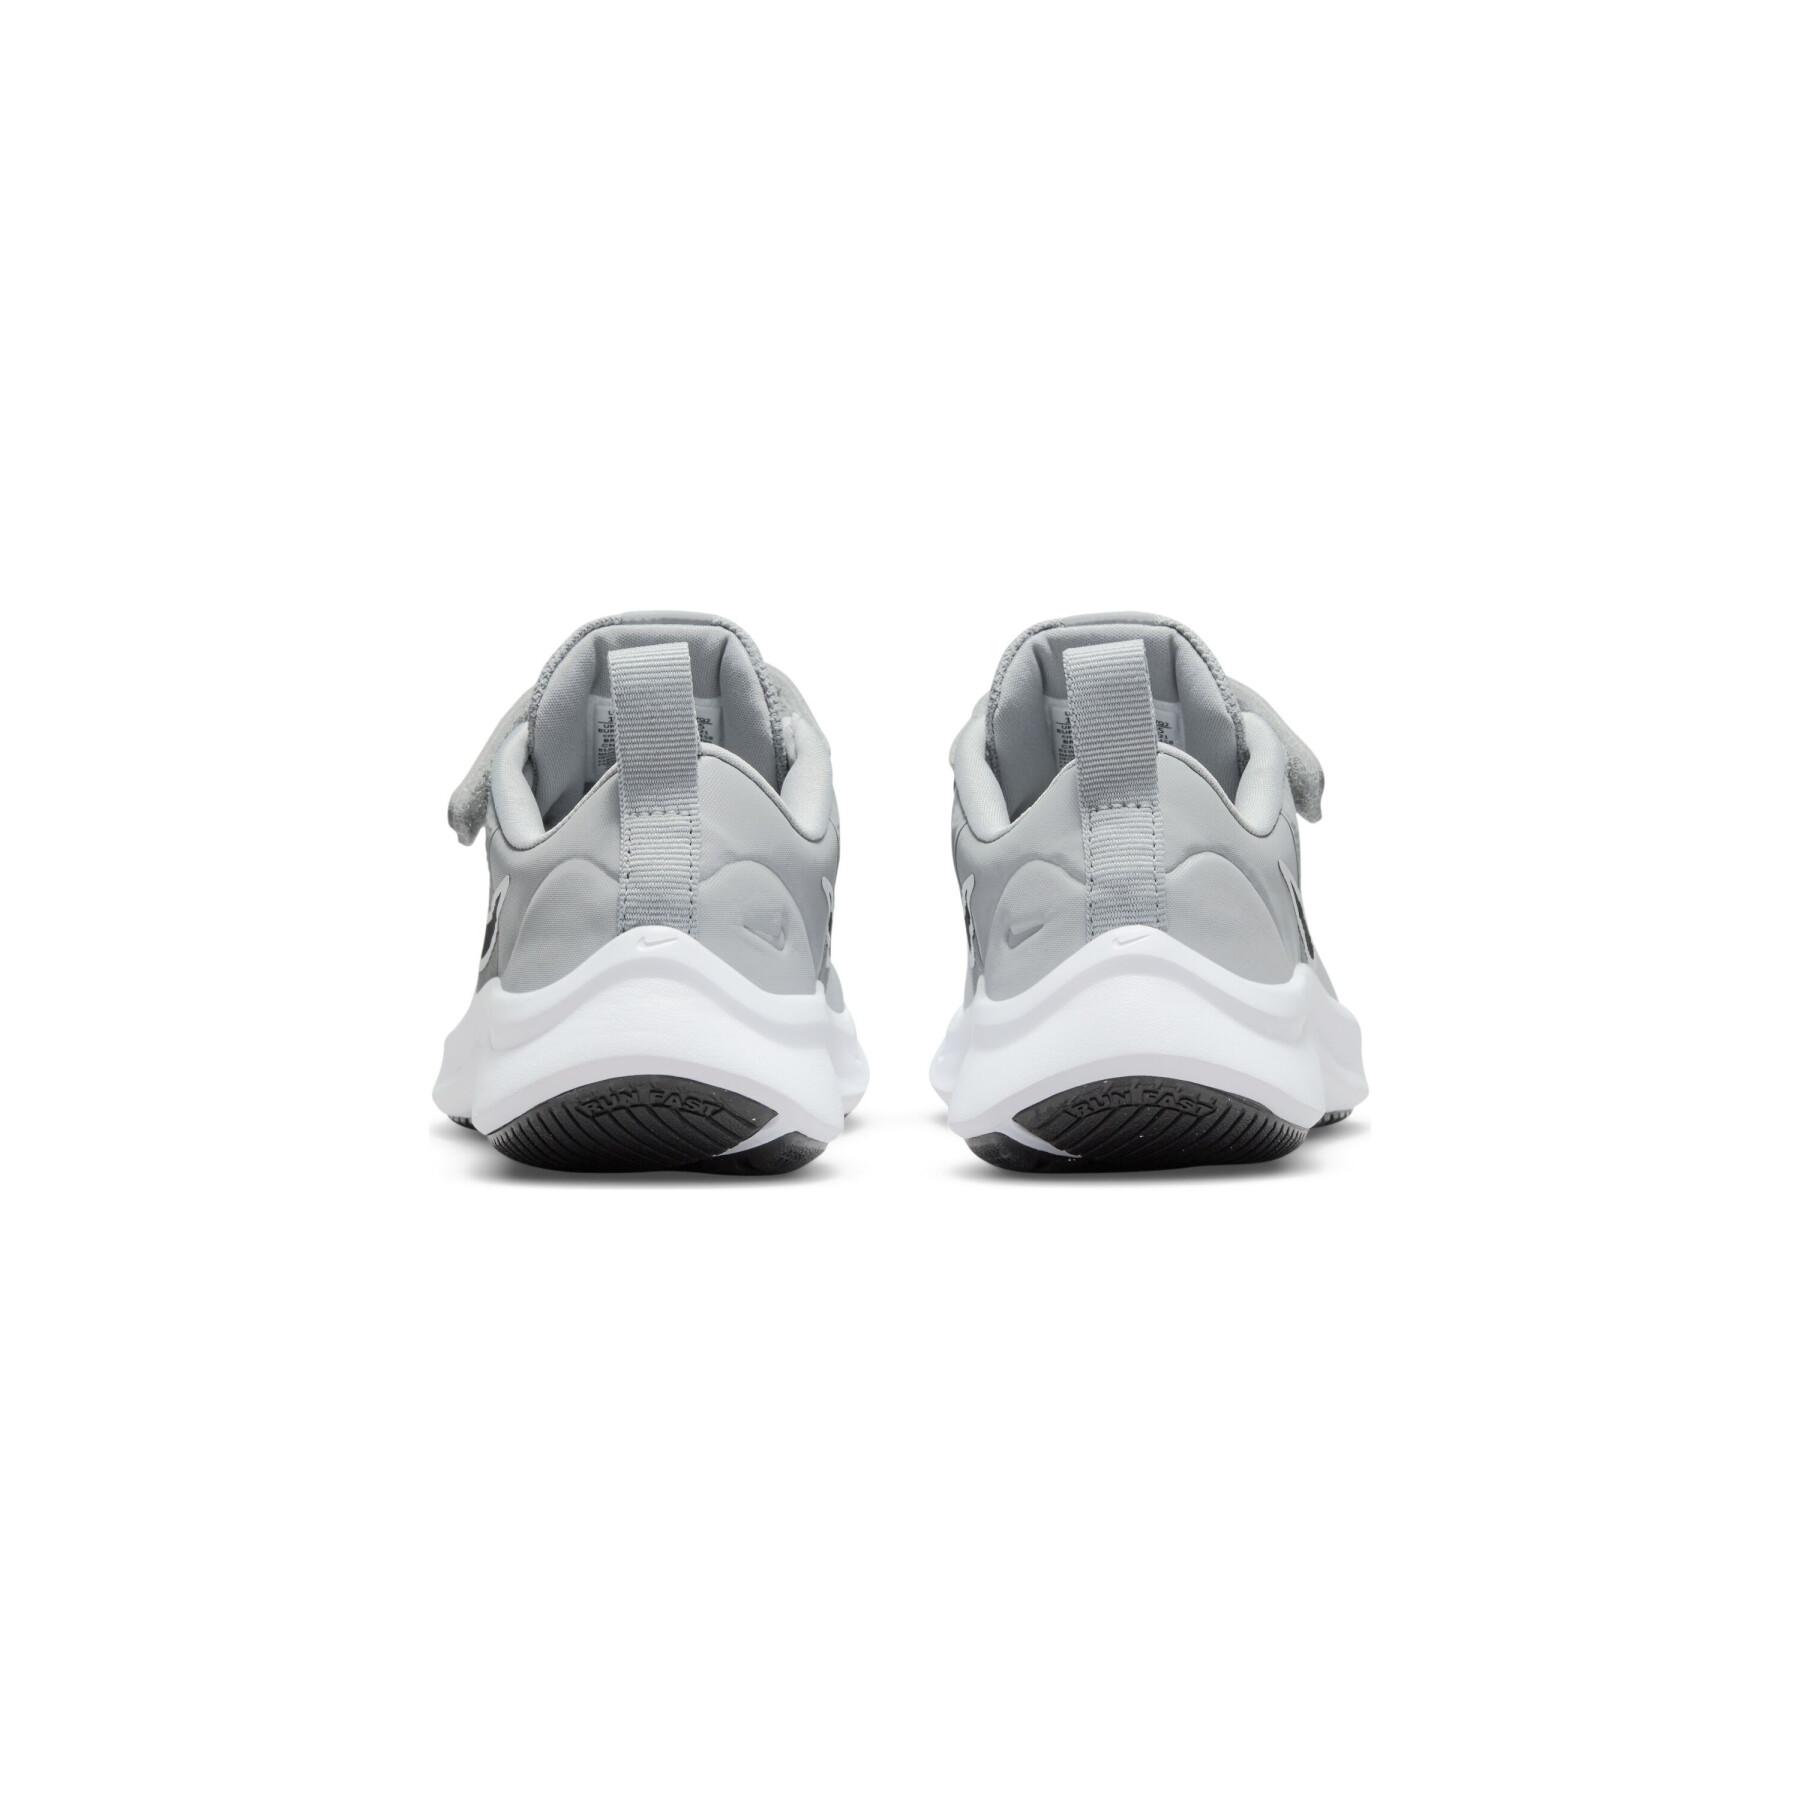 Zapatillas infantiles Nike Star Runner 3